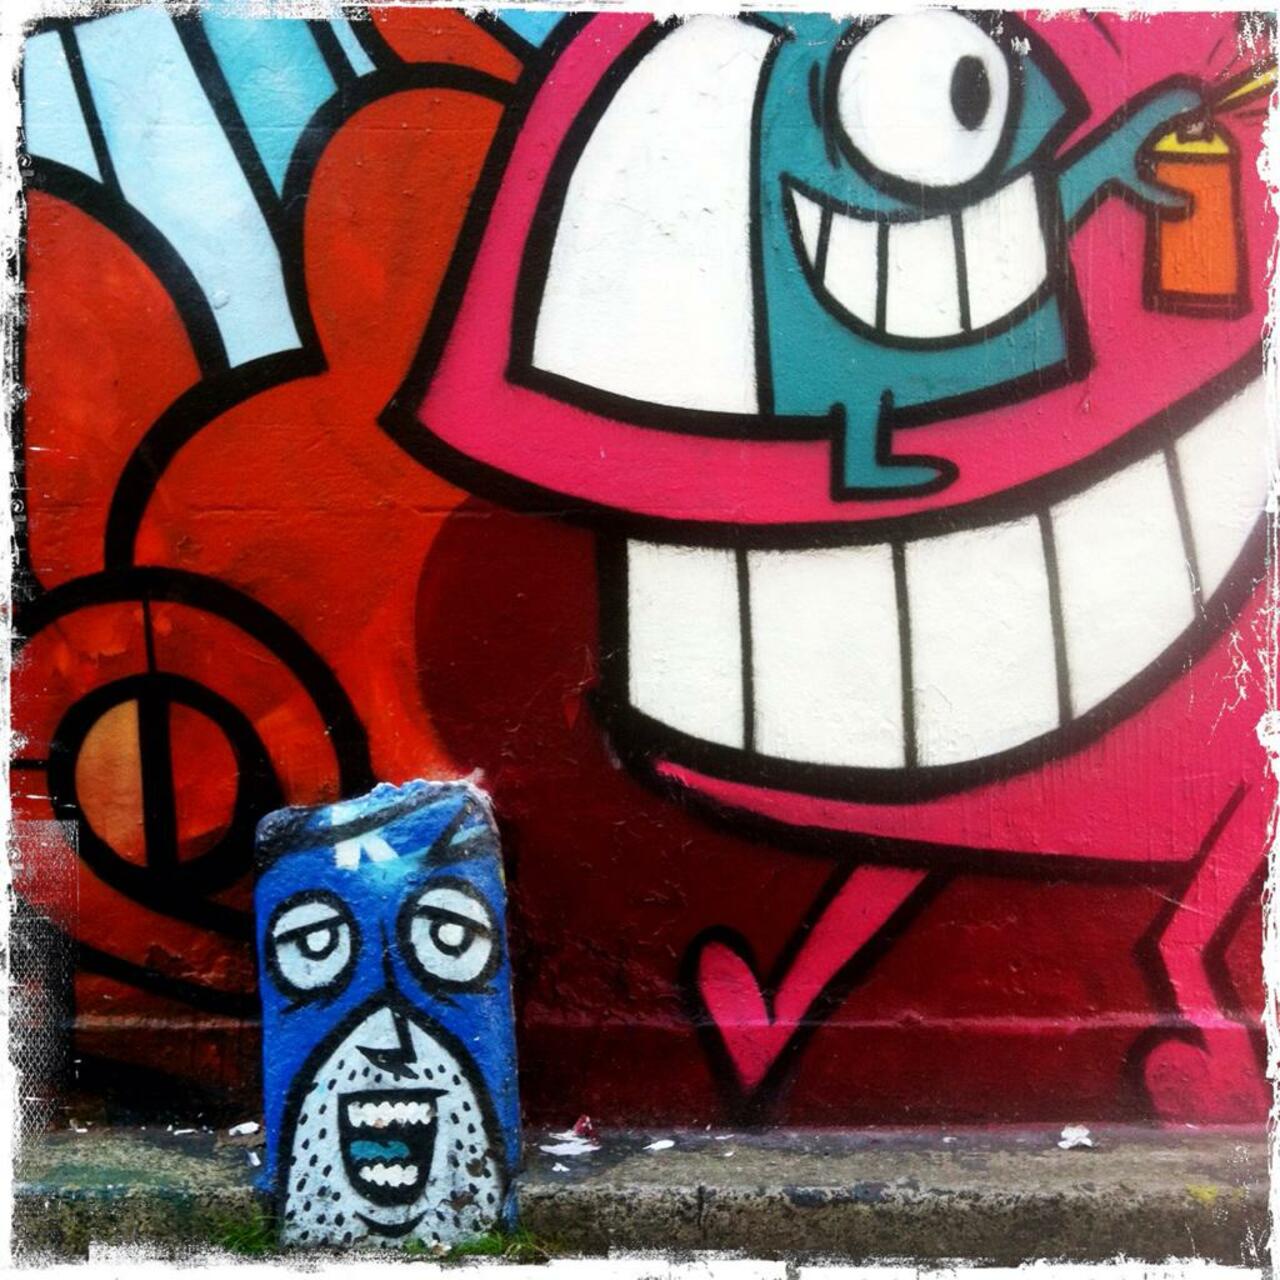 Smiles all round - @kristiandouglas & @PezBarcelona work in Star Yard, Brick Lane #art #streetart #graffiti http://t.co/E1hqqBwEt8